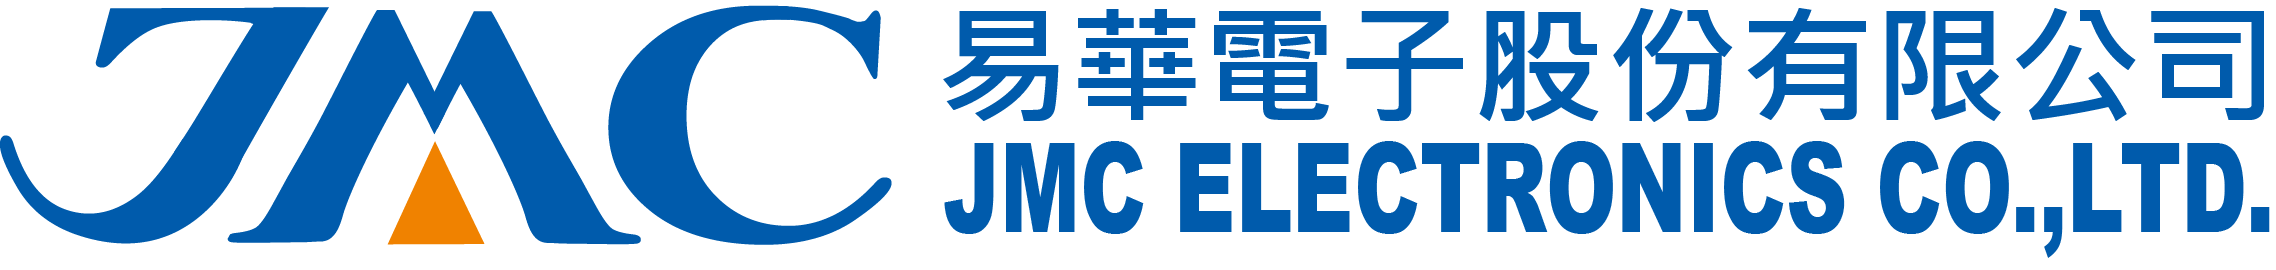 JMC Electronics Co., Ltd.